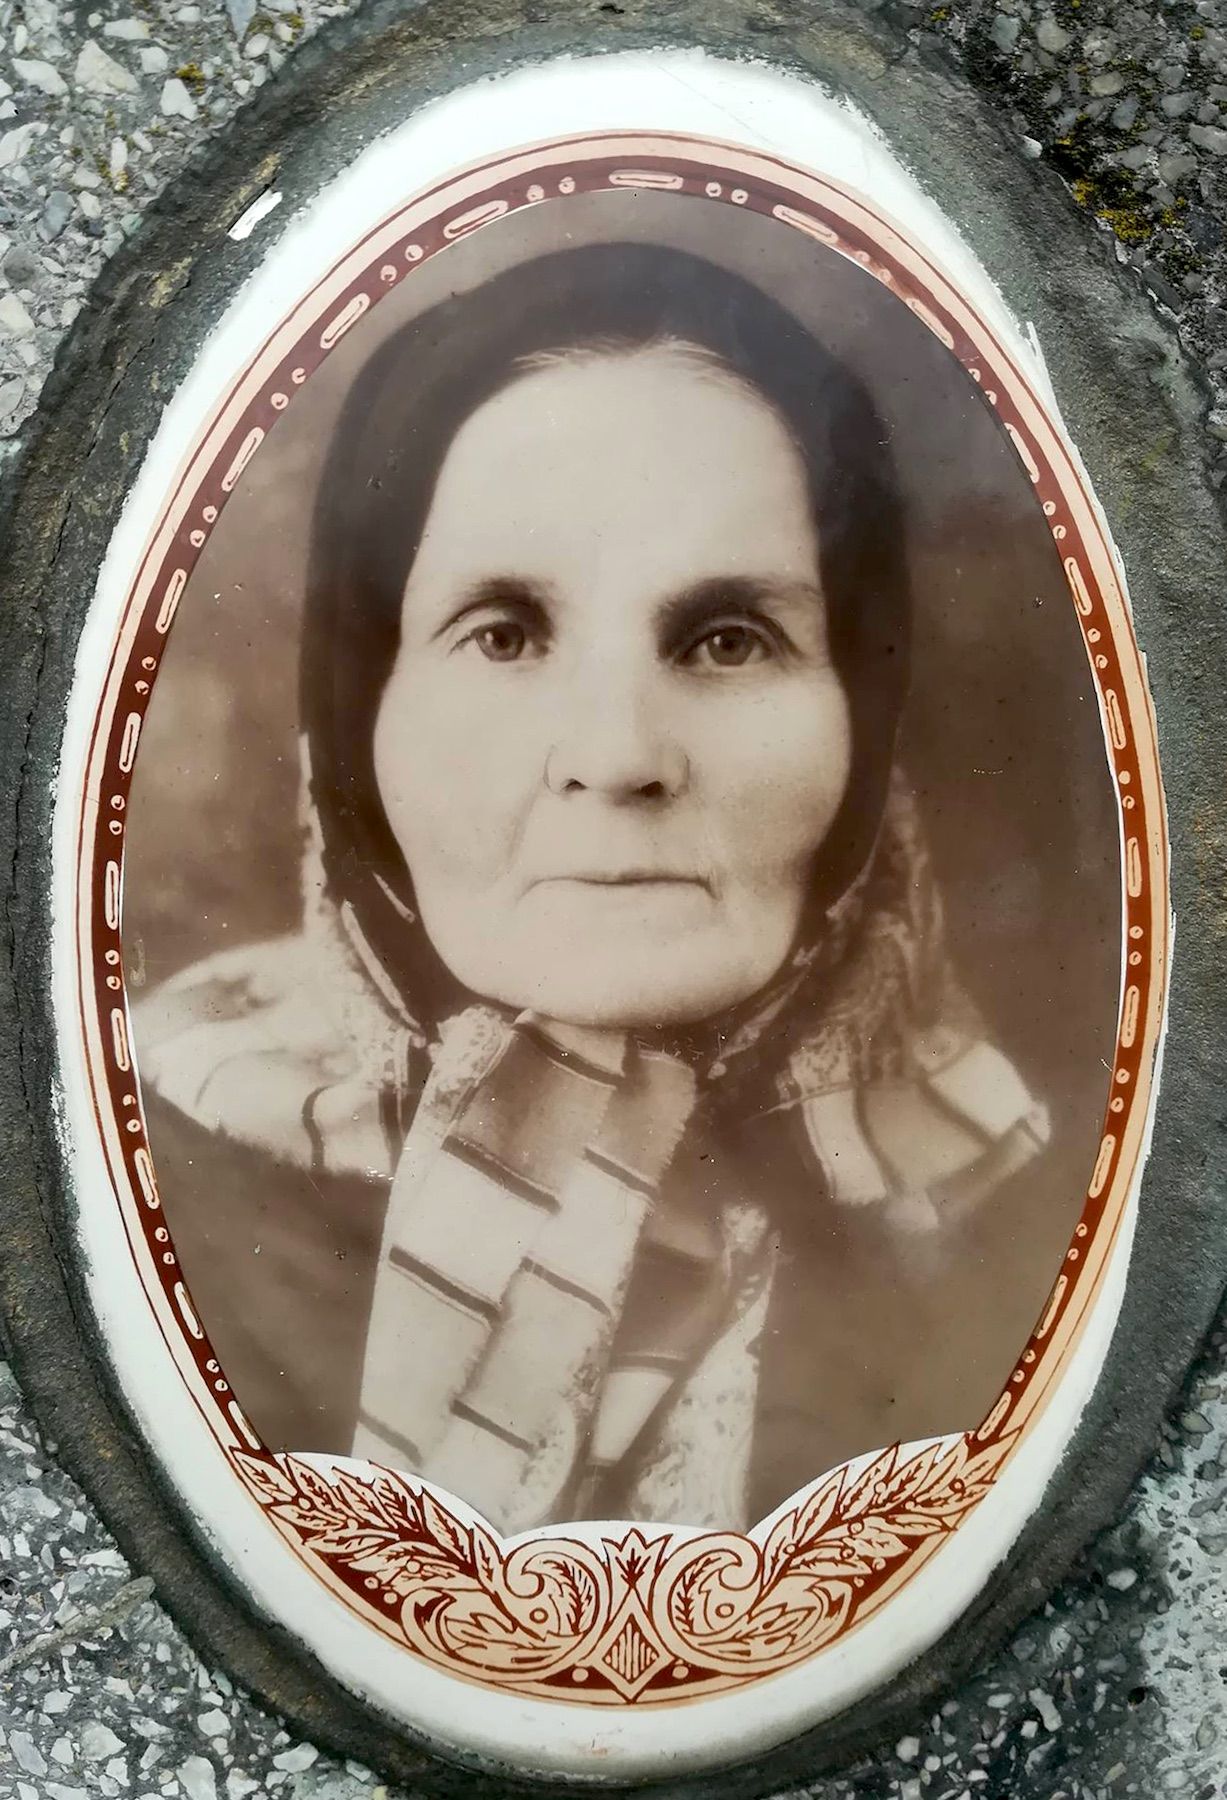 Портрет Ганни Кваснєвскої з її могильного пам’ятника - фото 72323